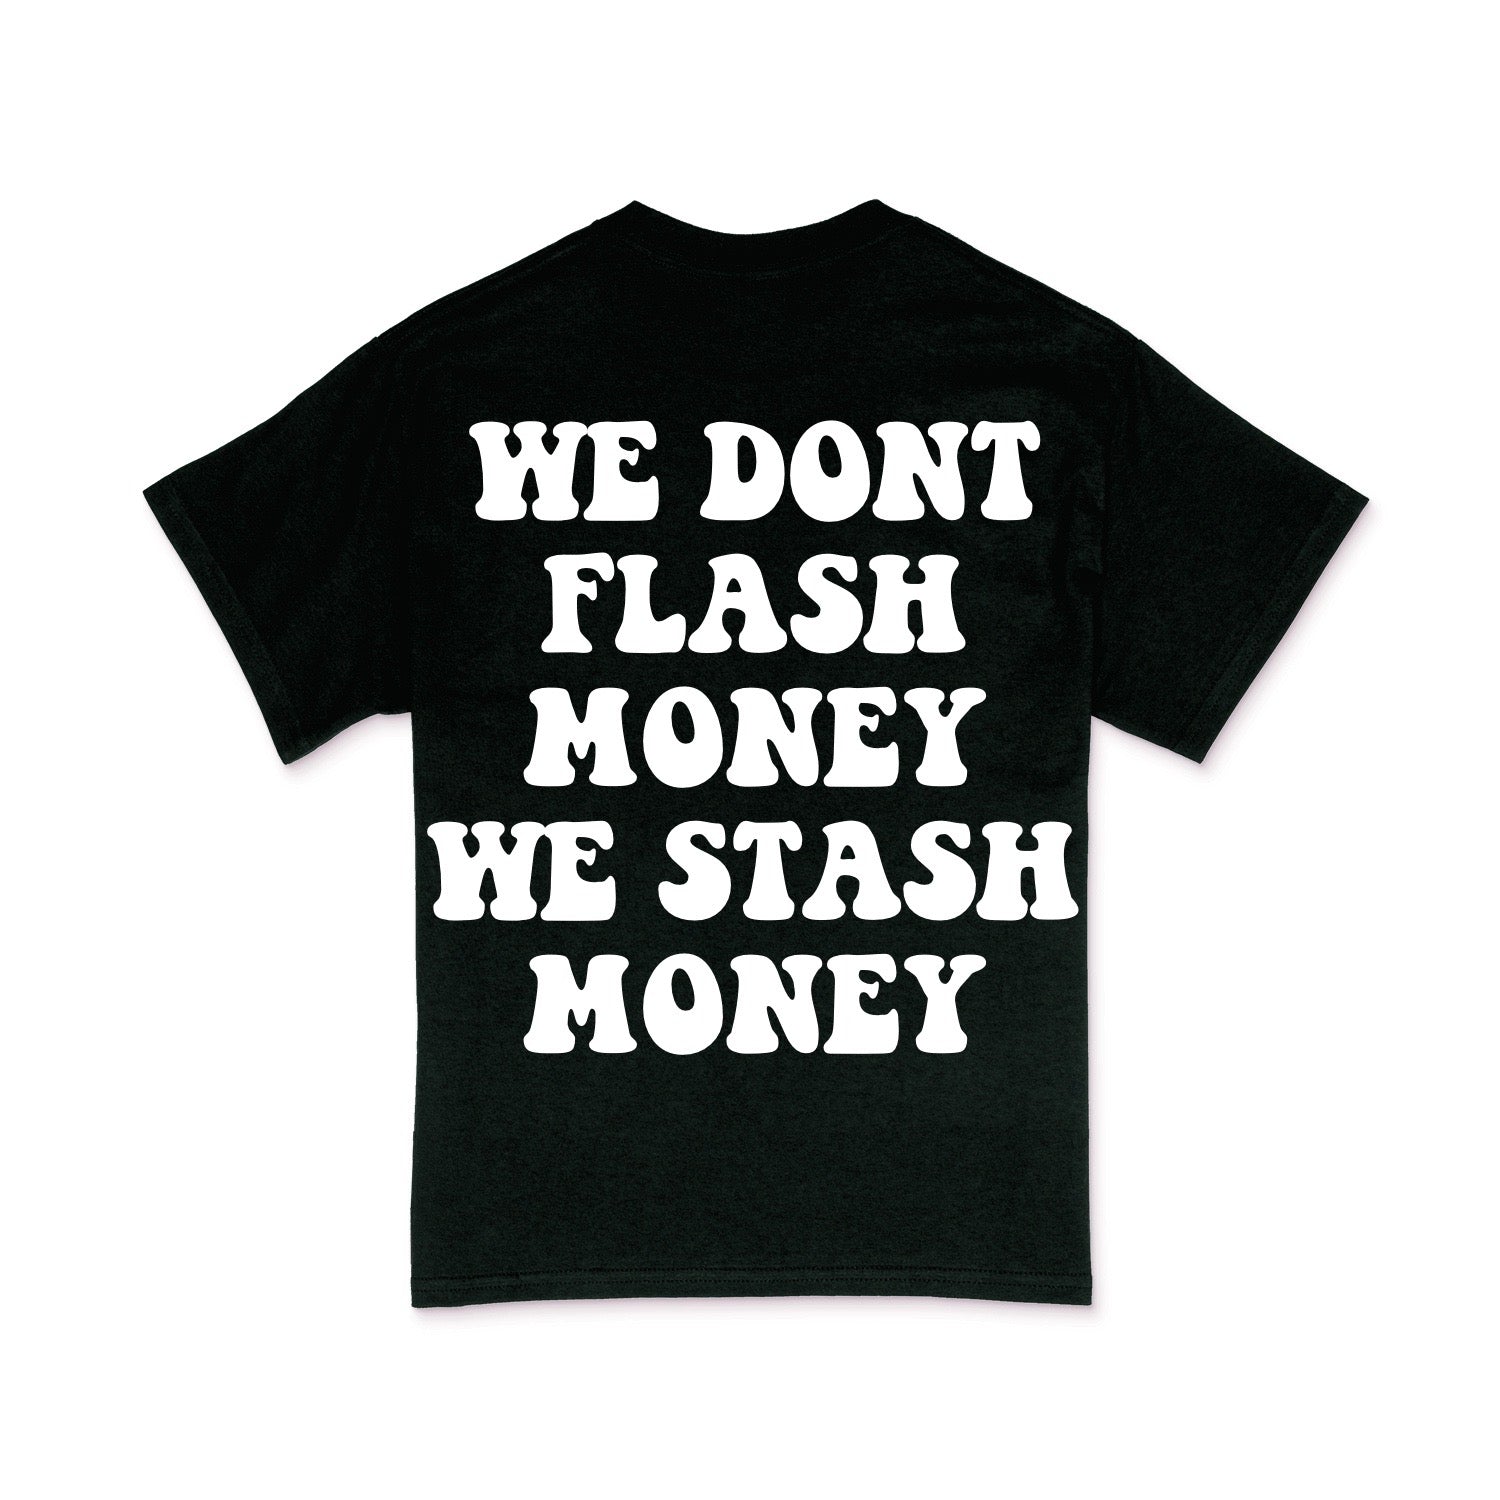 We don’t flash money shirt